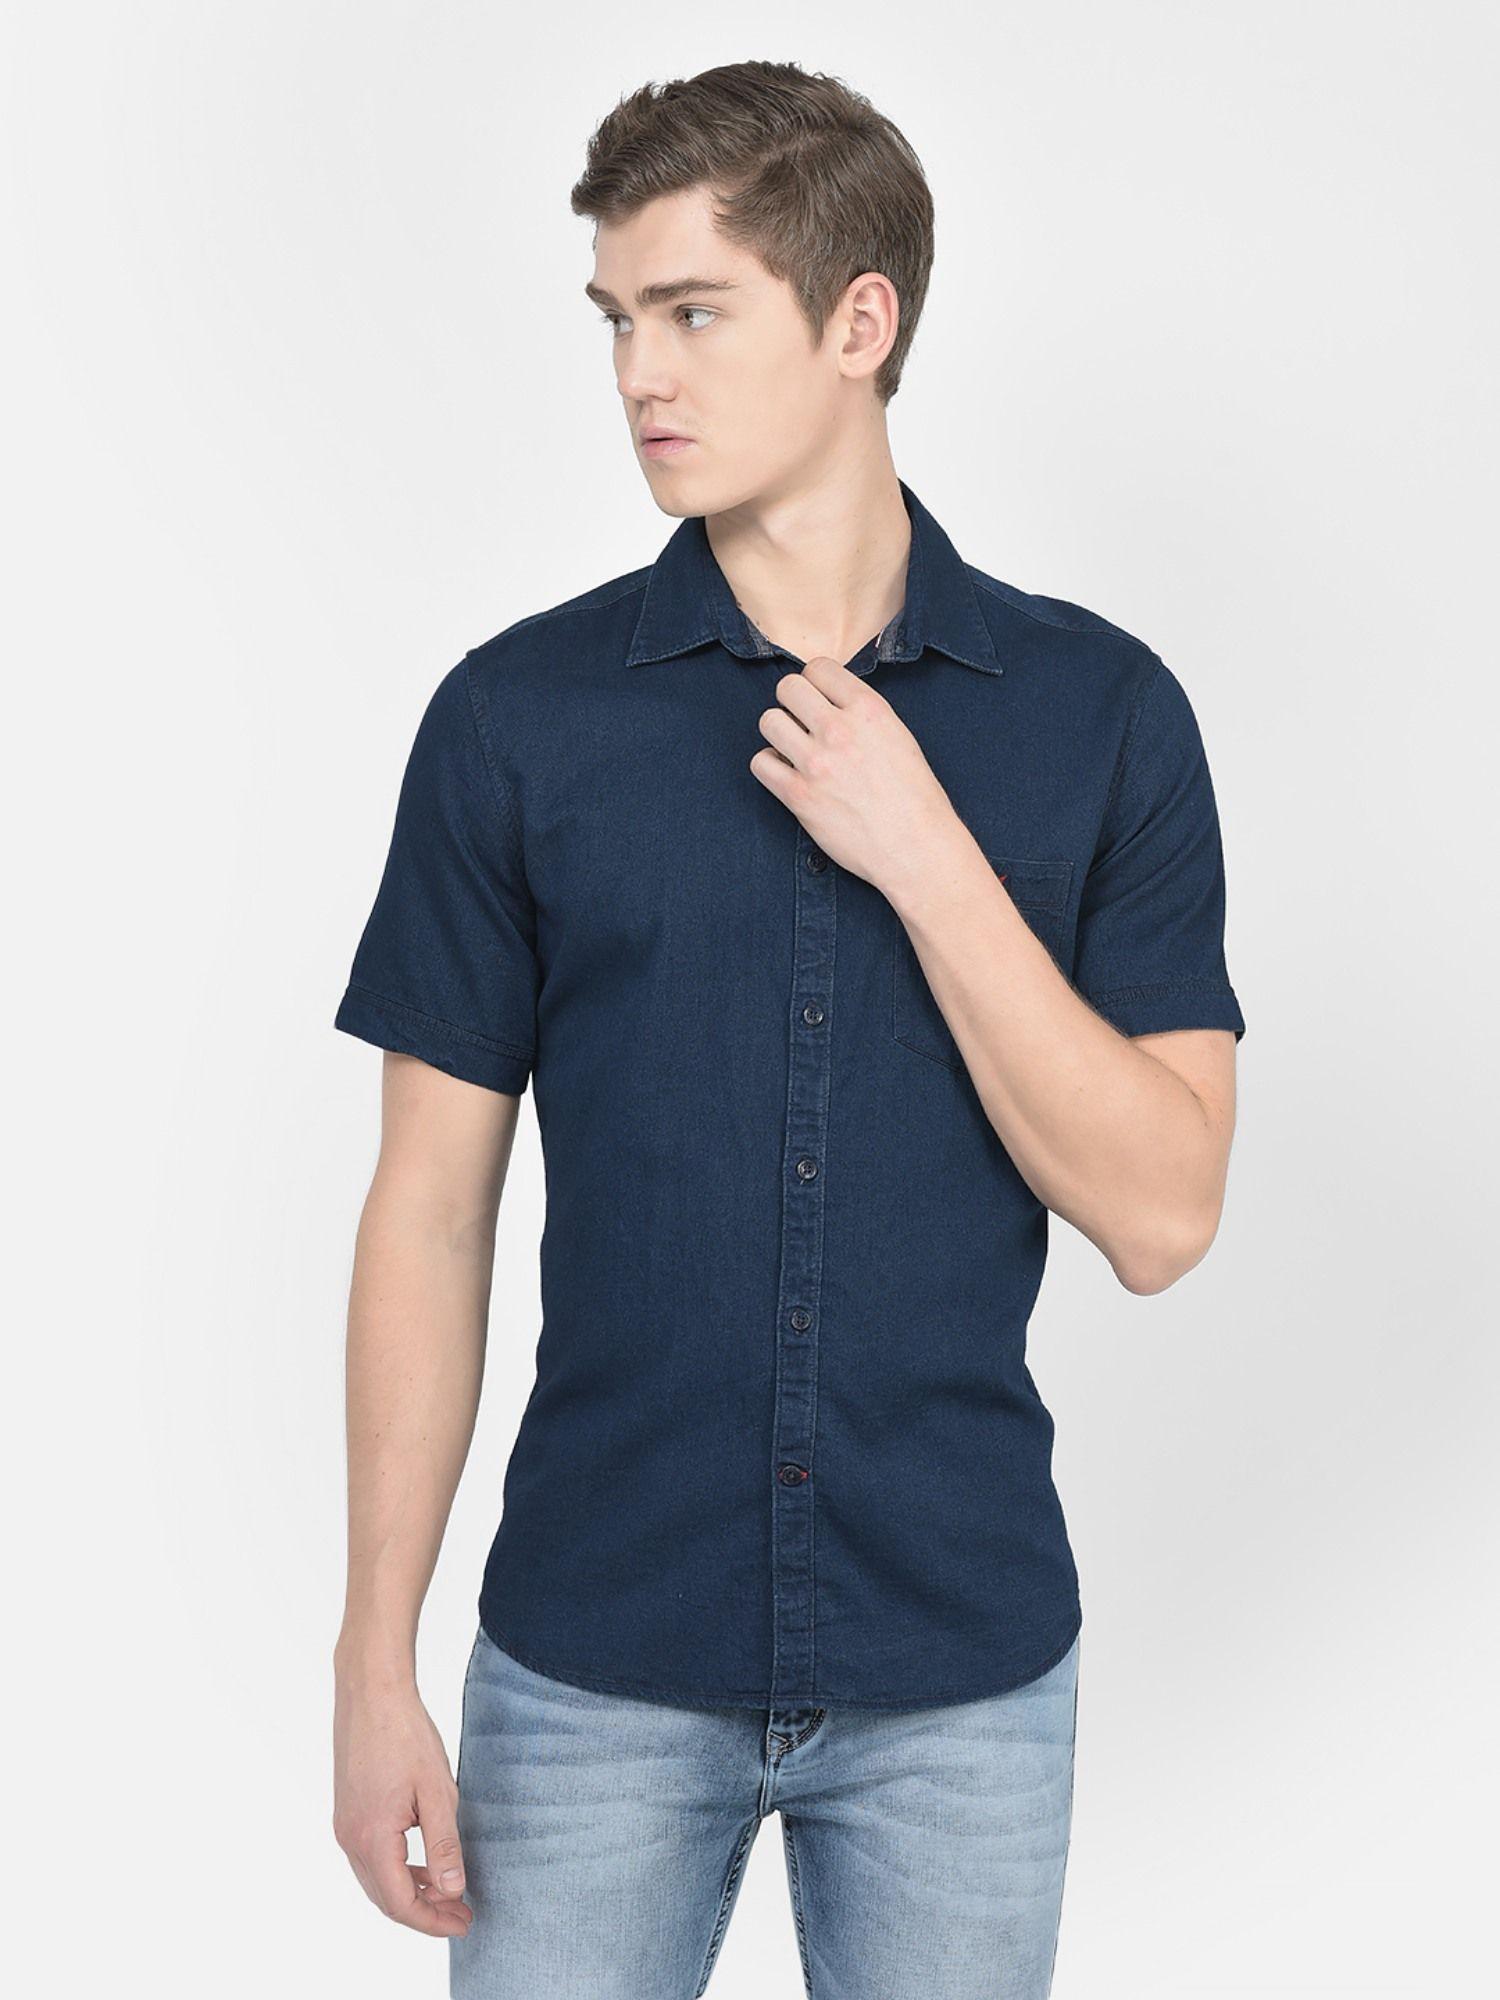 men-navy-blue-short-sleeved-denim-shirt